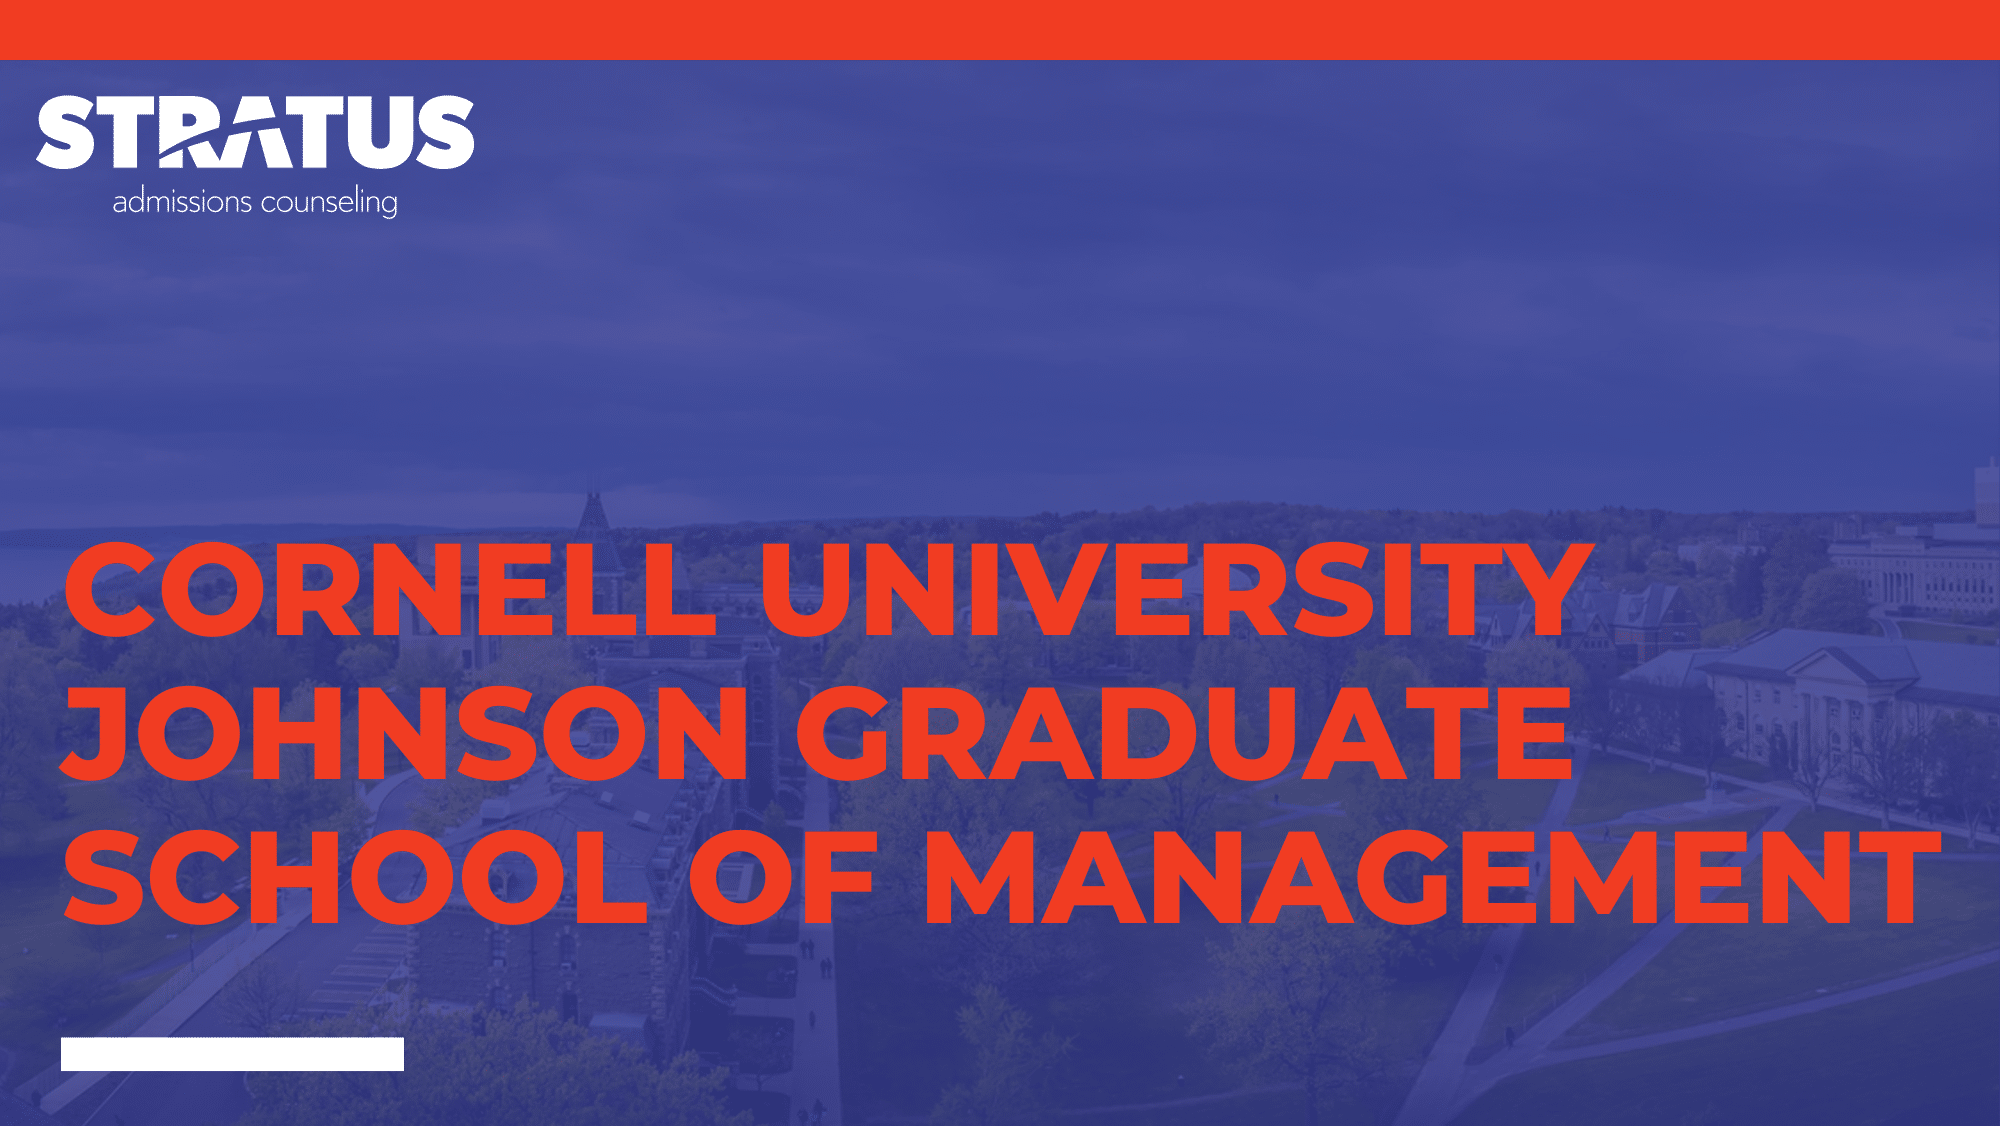 How to Get into Cornell University Johnson Graduate School of Management